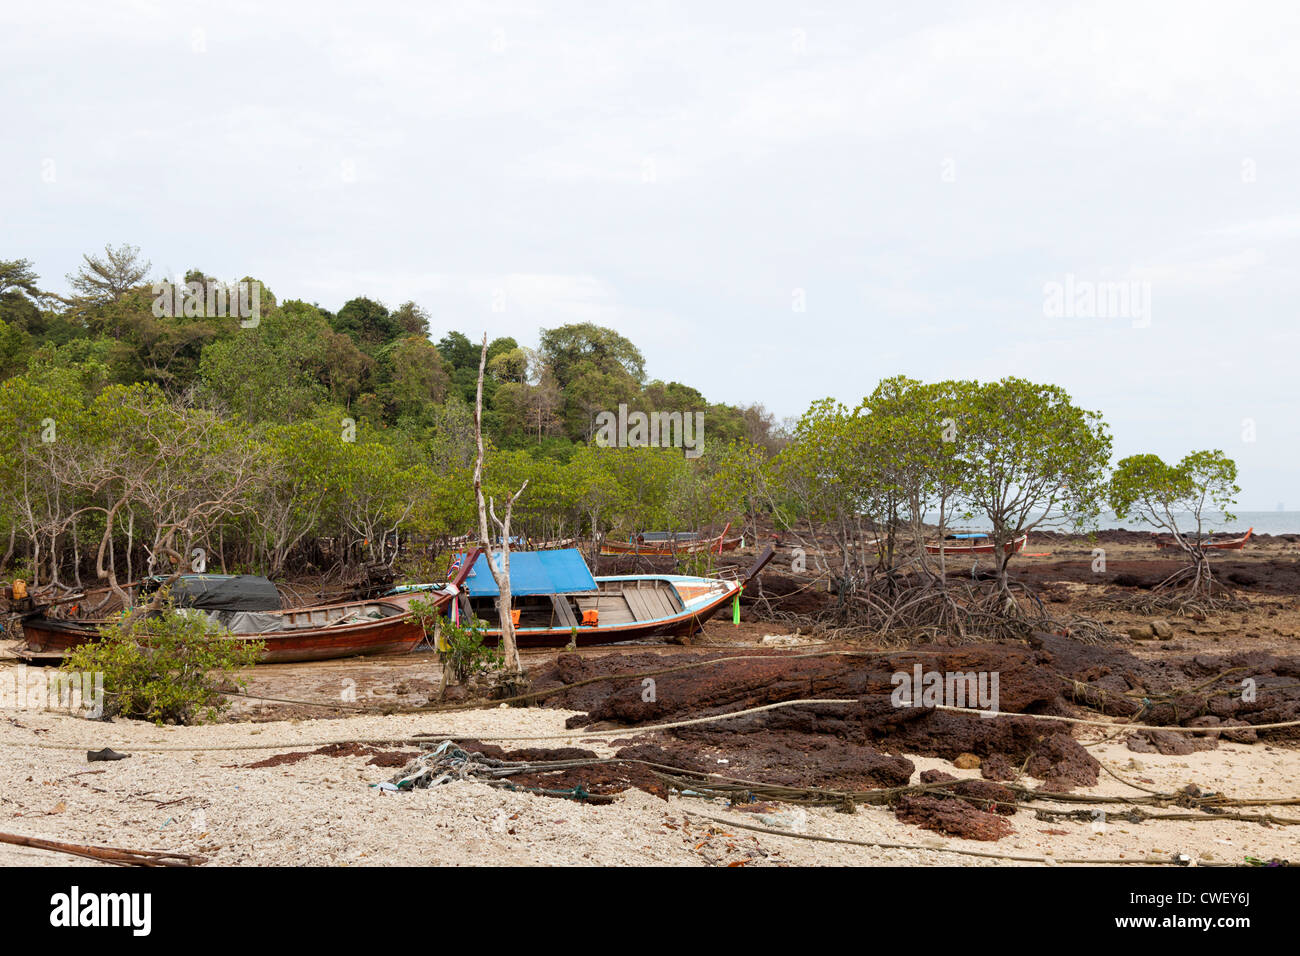 Lange Rute Boote liegen bei Ebbe in den Mangroven (Bulon Insel - Thailand) hoch und trocken Bateaux À Longue Queue À Marée Basse. Stockfoto